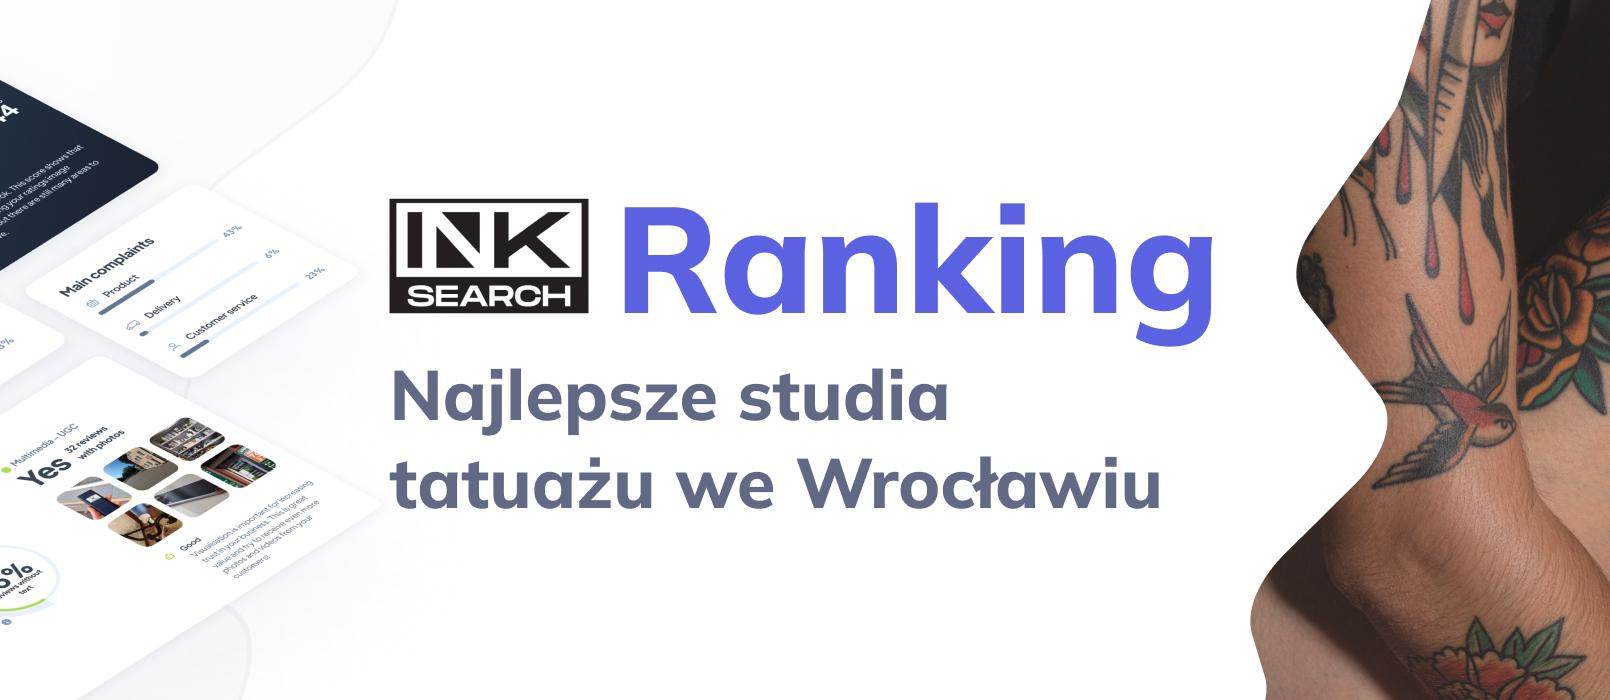 Studia tatuażu we Wrocławiu - ranking TOP 10